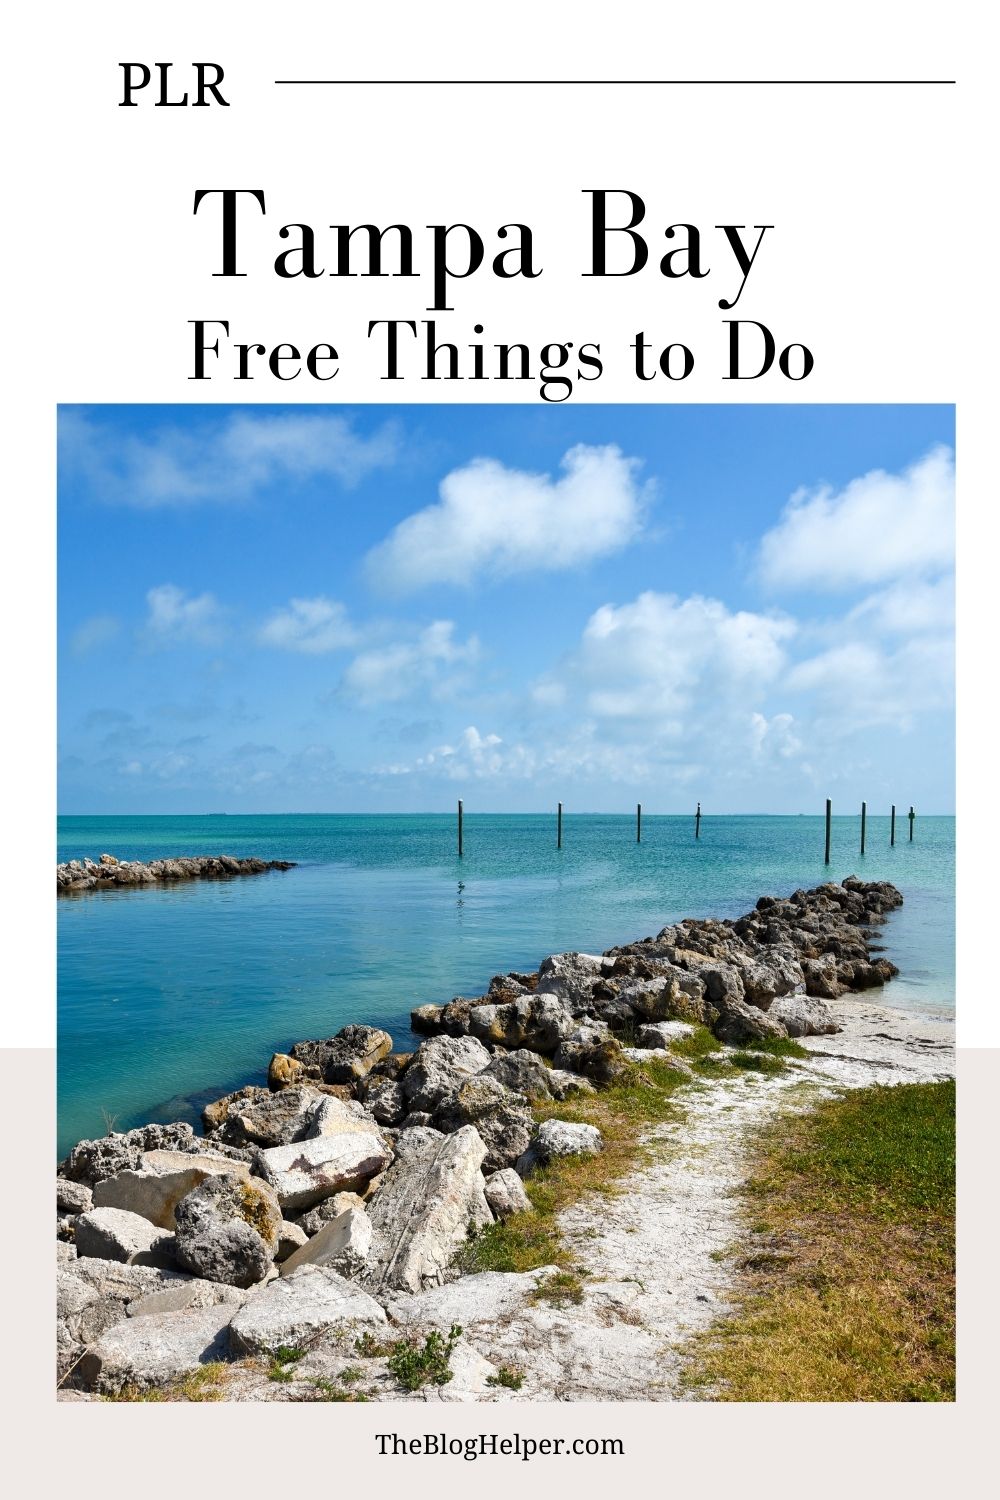 Tampa Bay – Free Things to Do PLR #plr #tampabay #florida